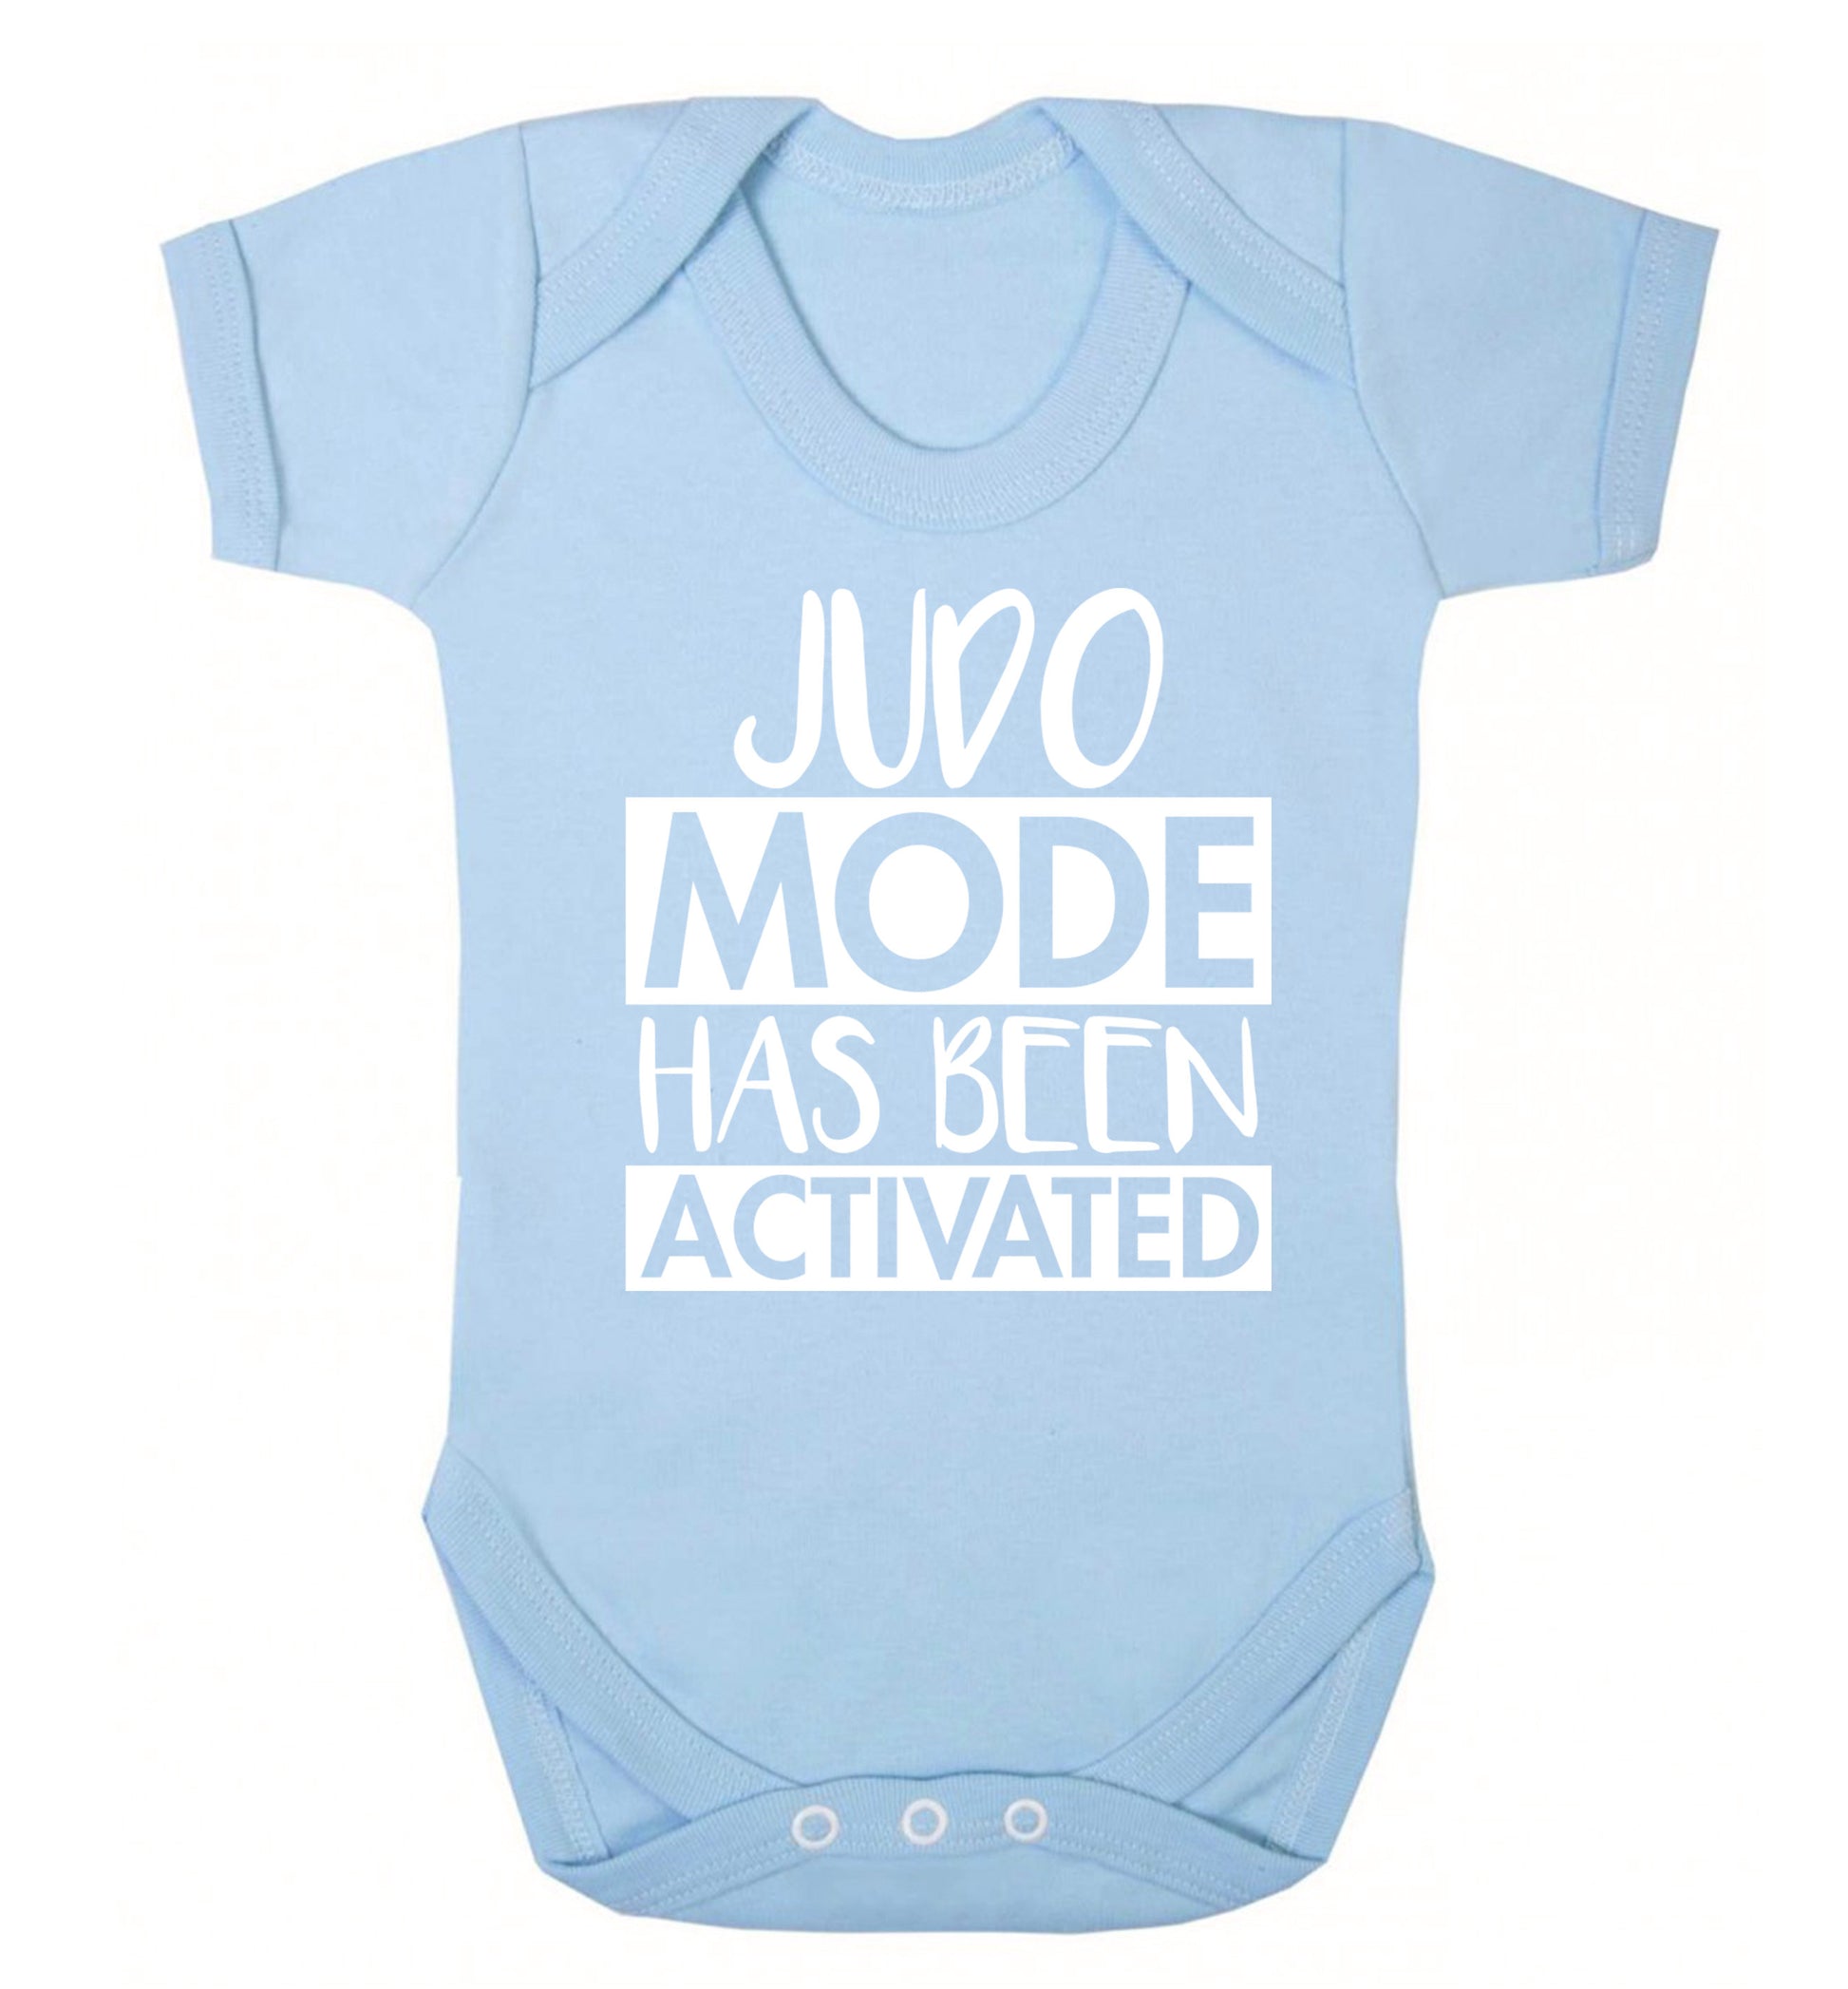 Judo mode activated Baby Vest pale blue 18-24 months